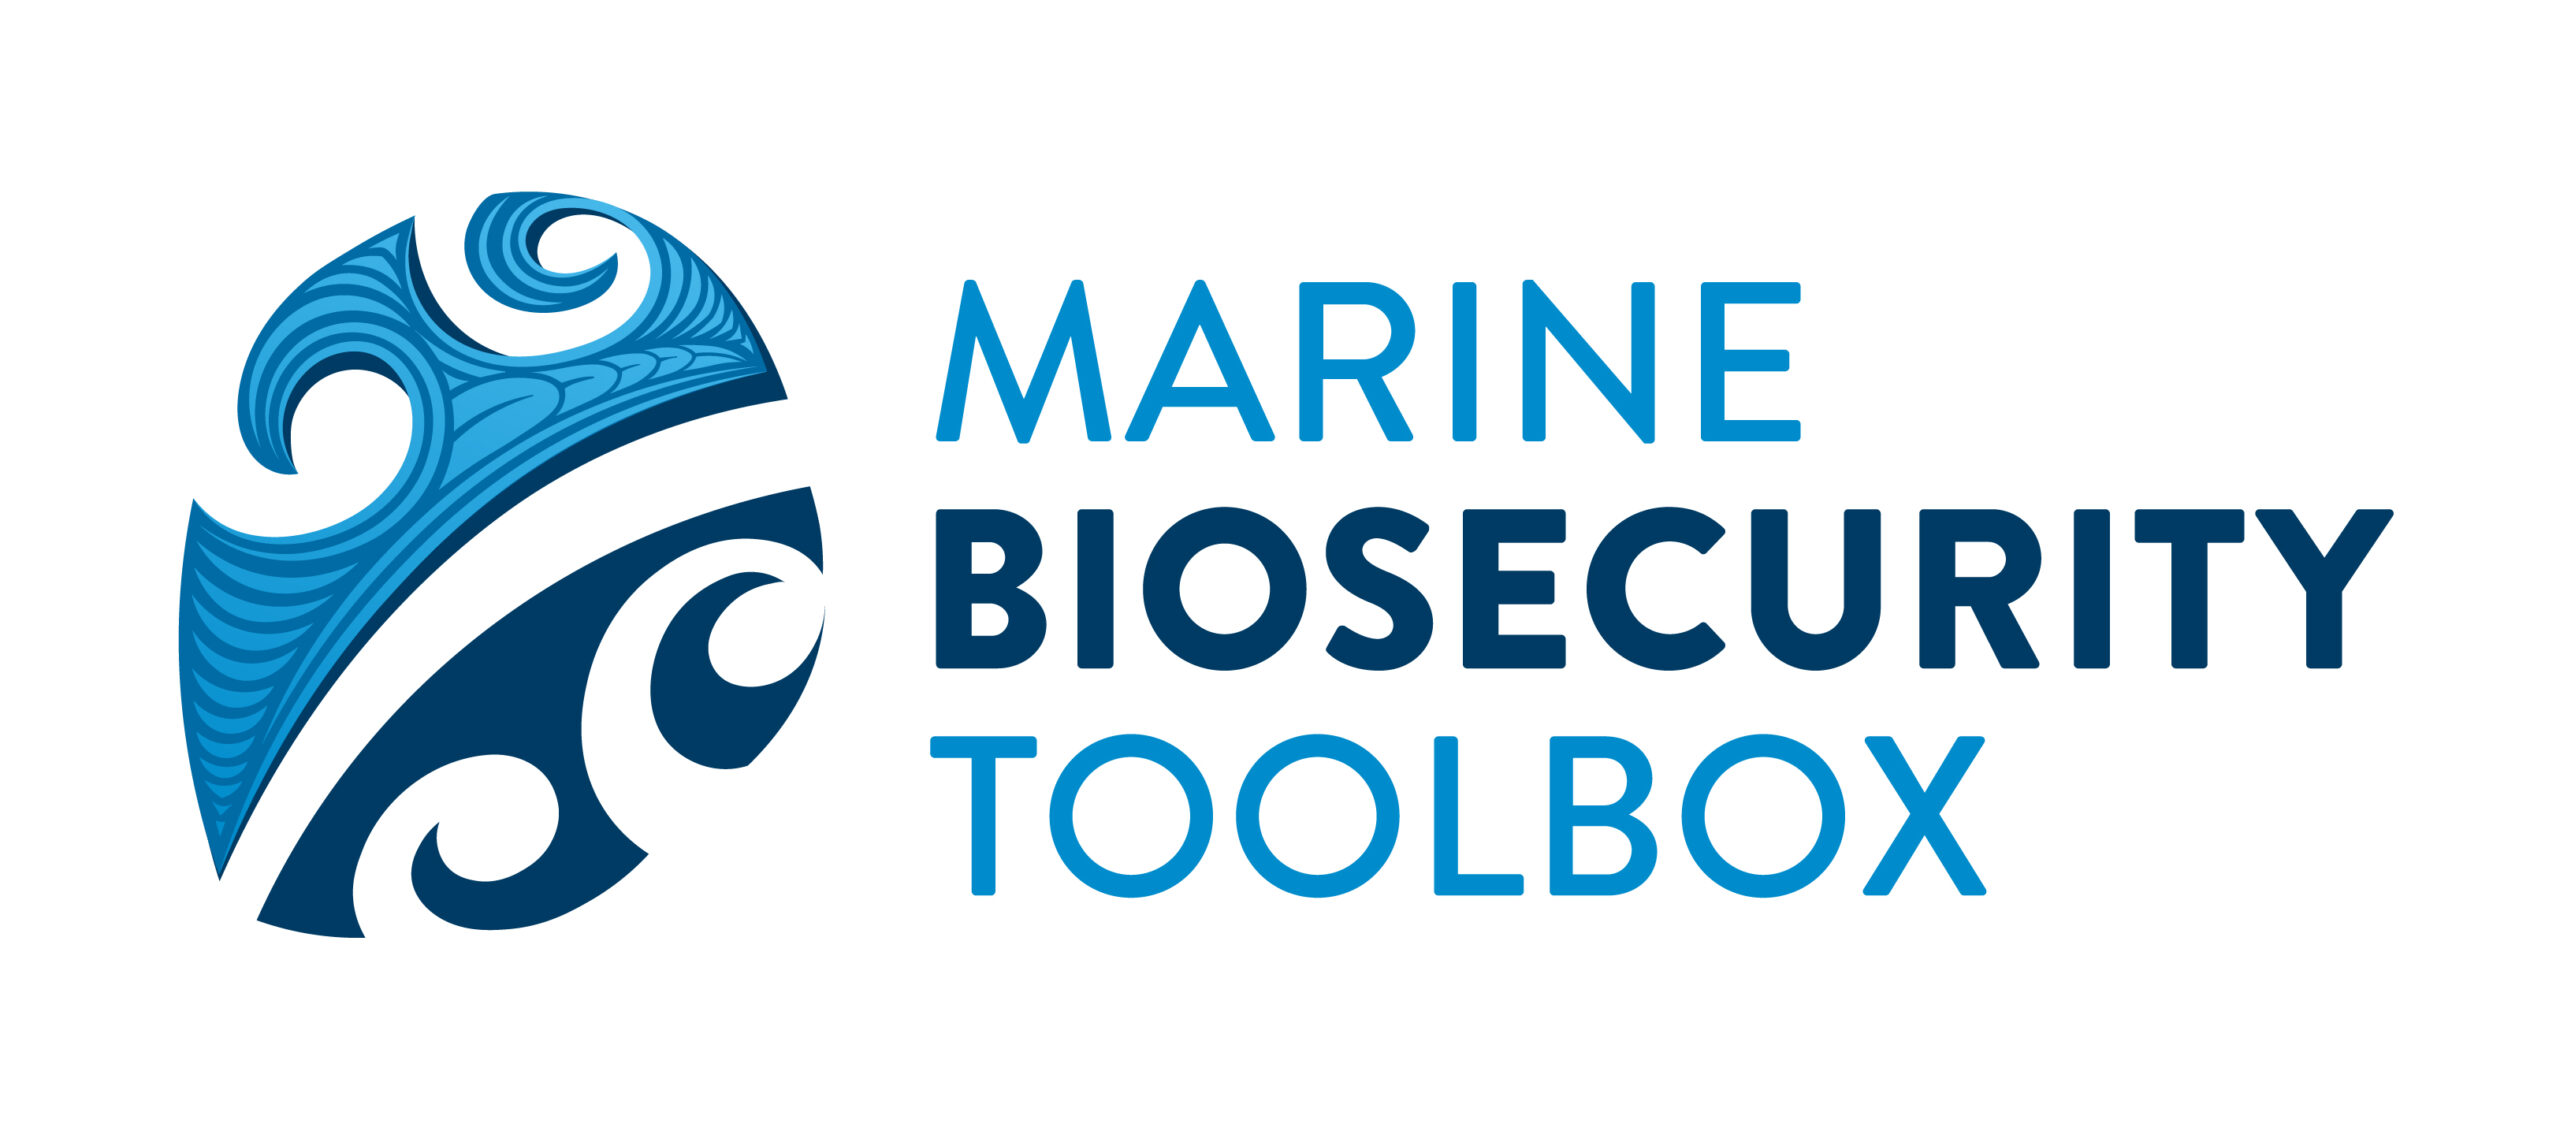 Marine Biosecurity Toolbox